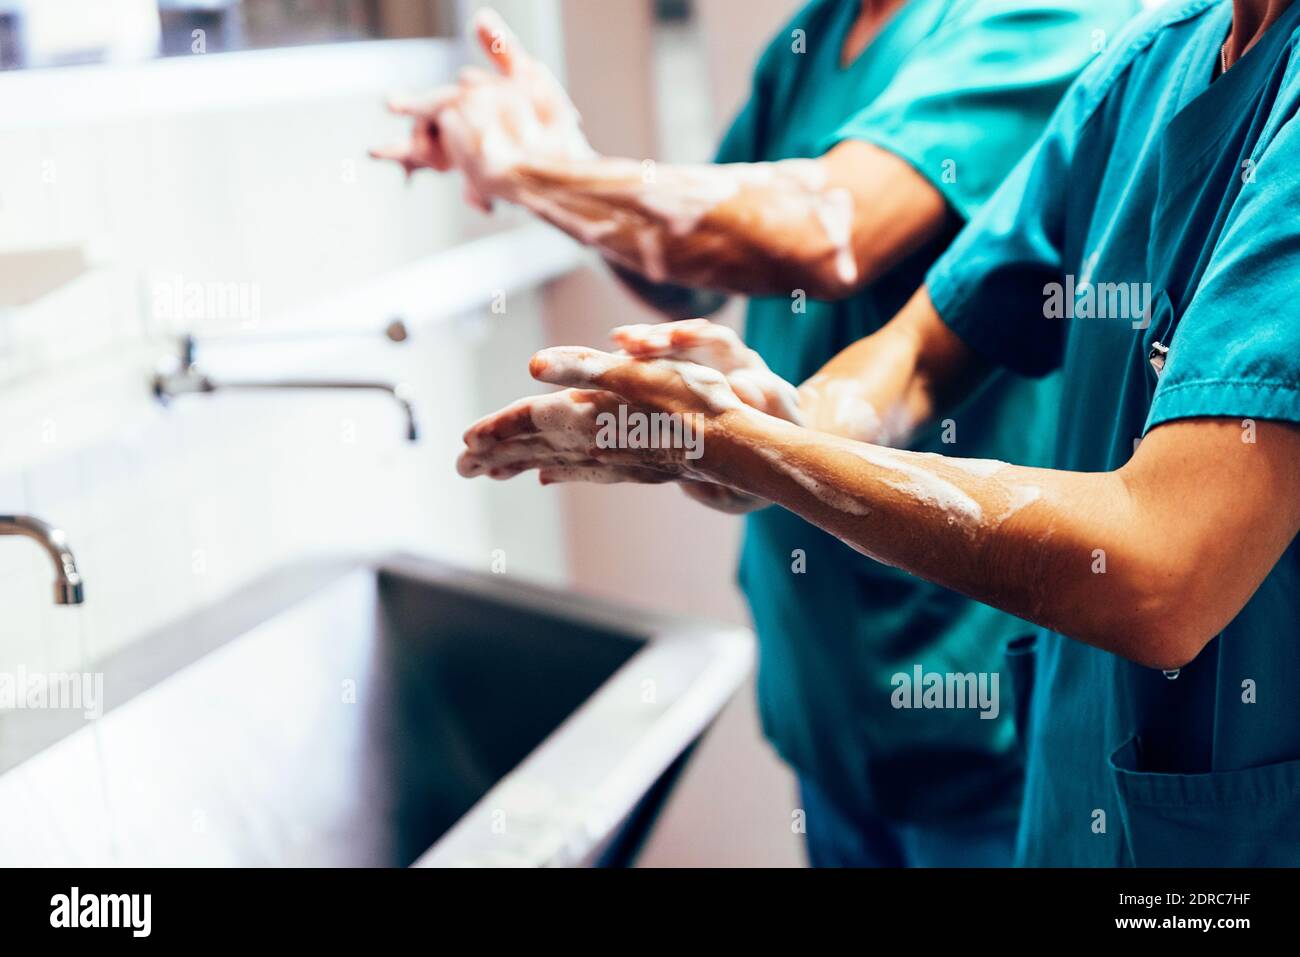 nurses-washing-hands-at-sink-stock-photo-alamy